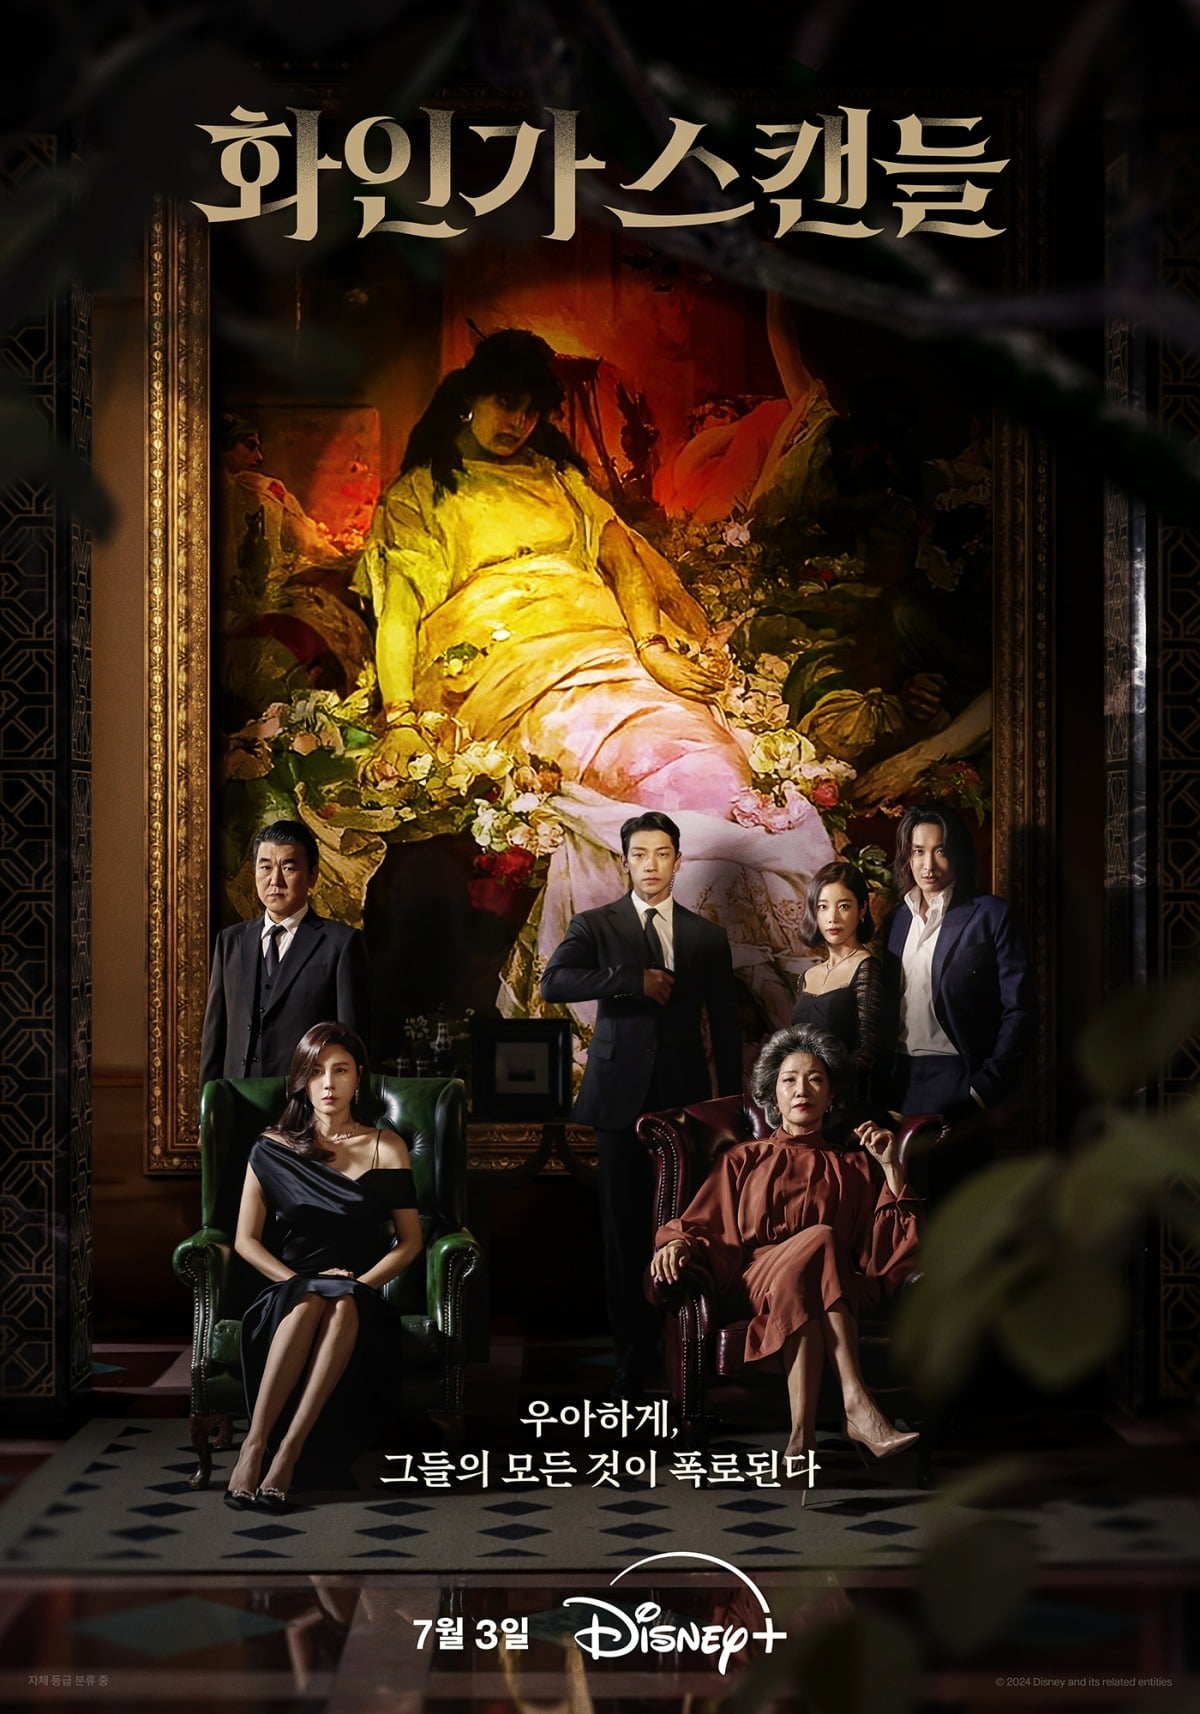 'Red Swan' starring Kim Ha-neul and Jeong Ji-hoon will be released on July 3